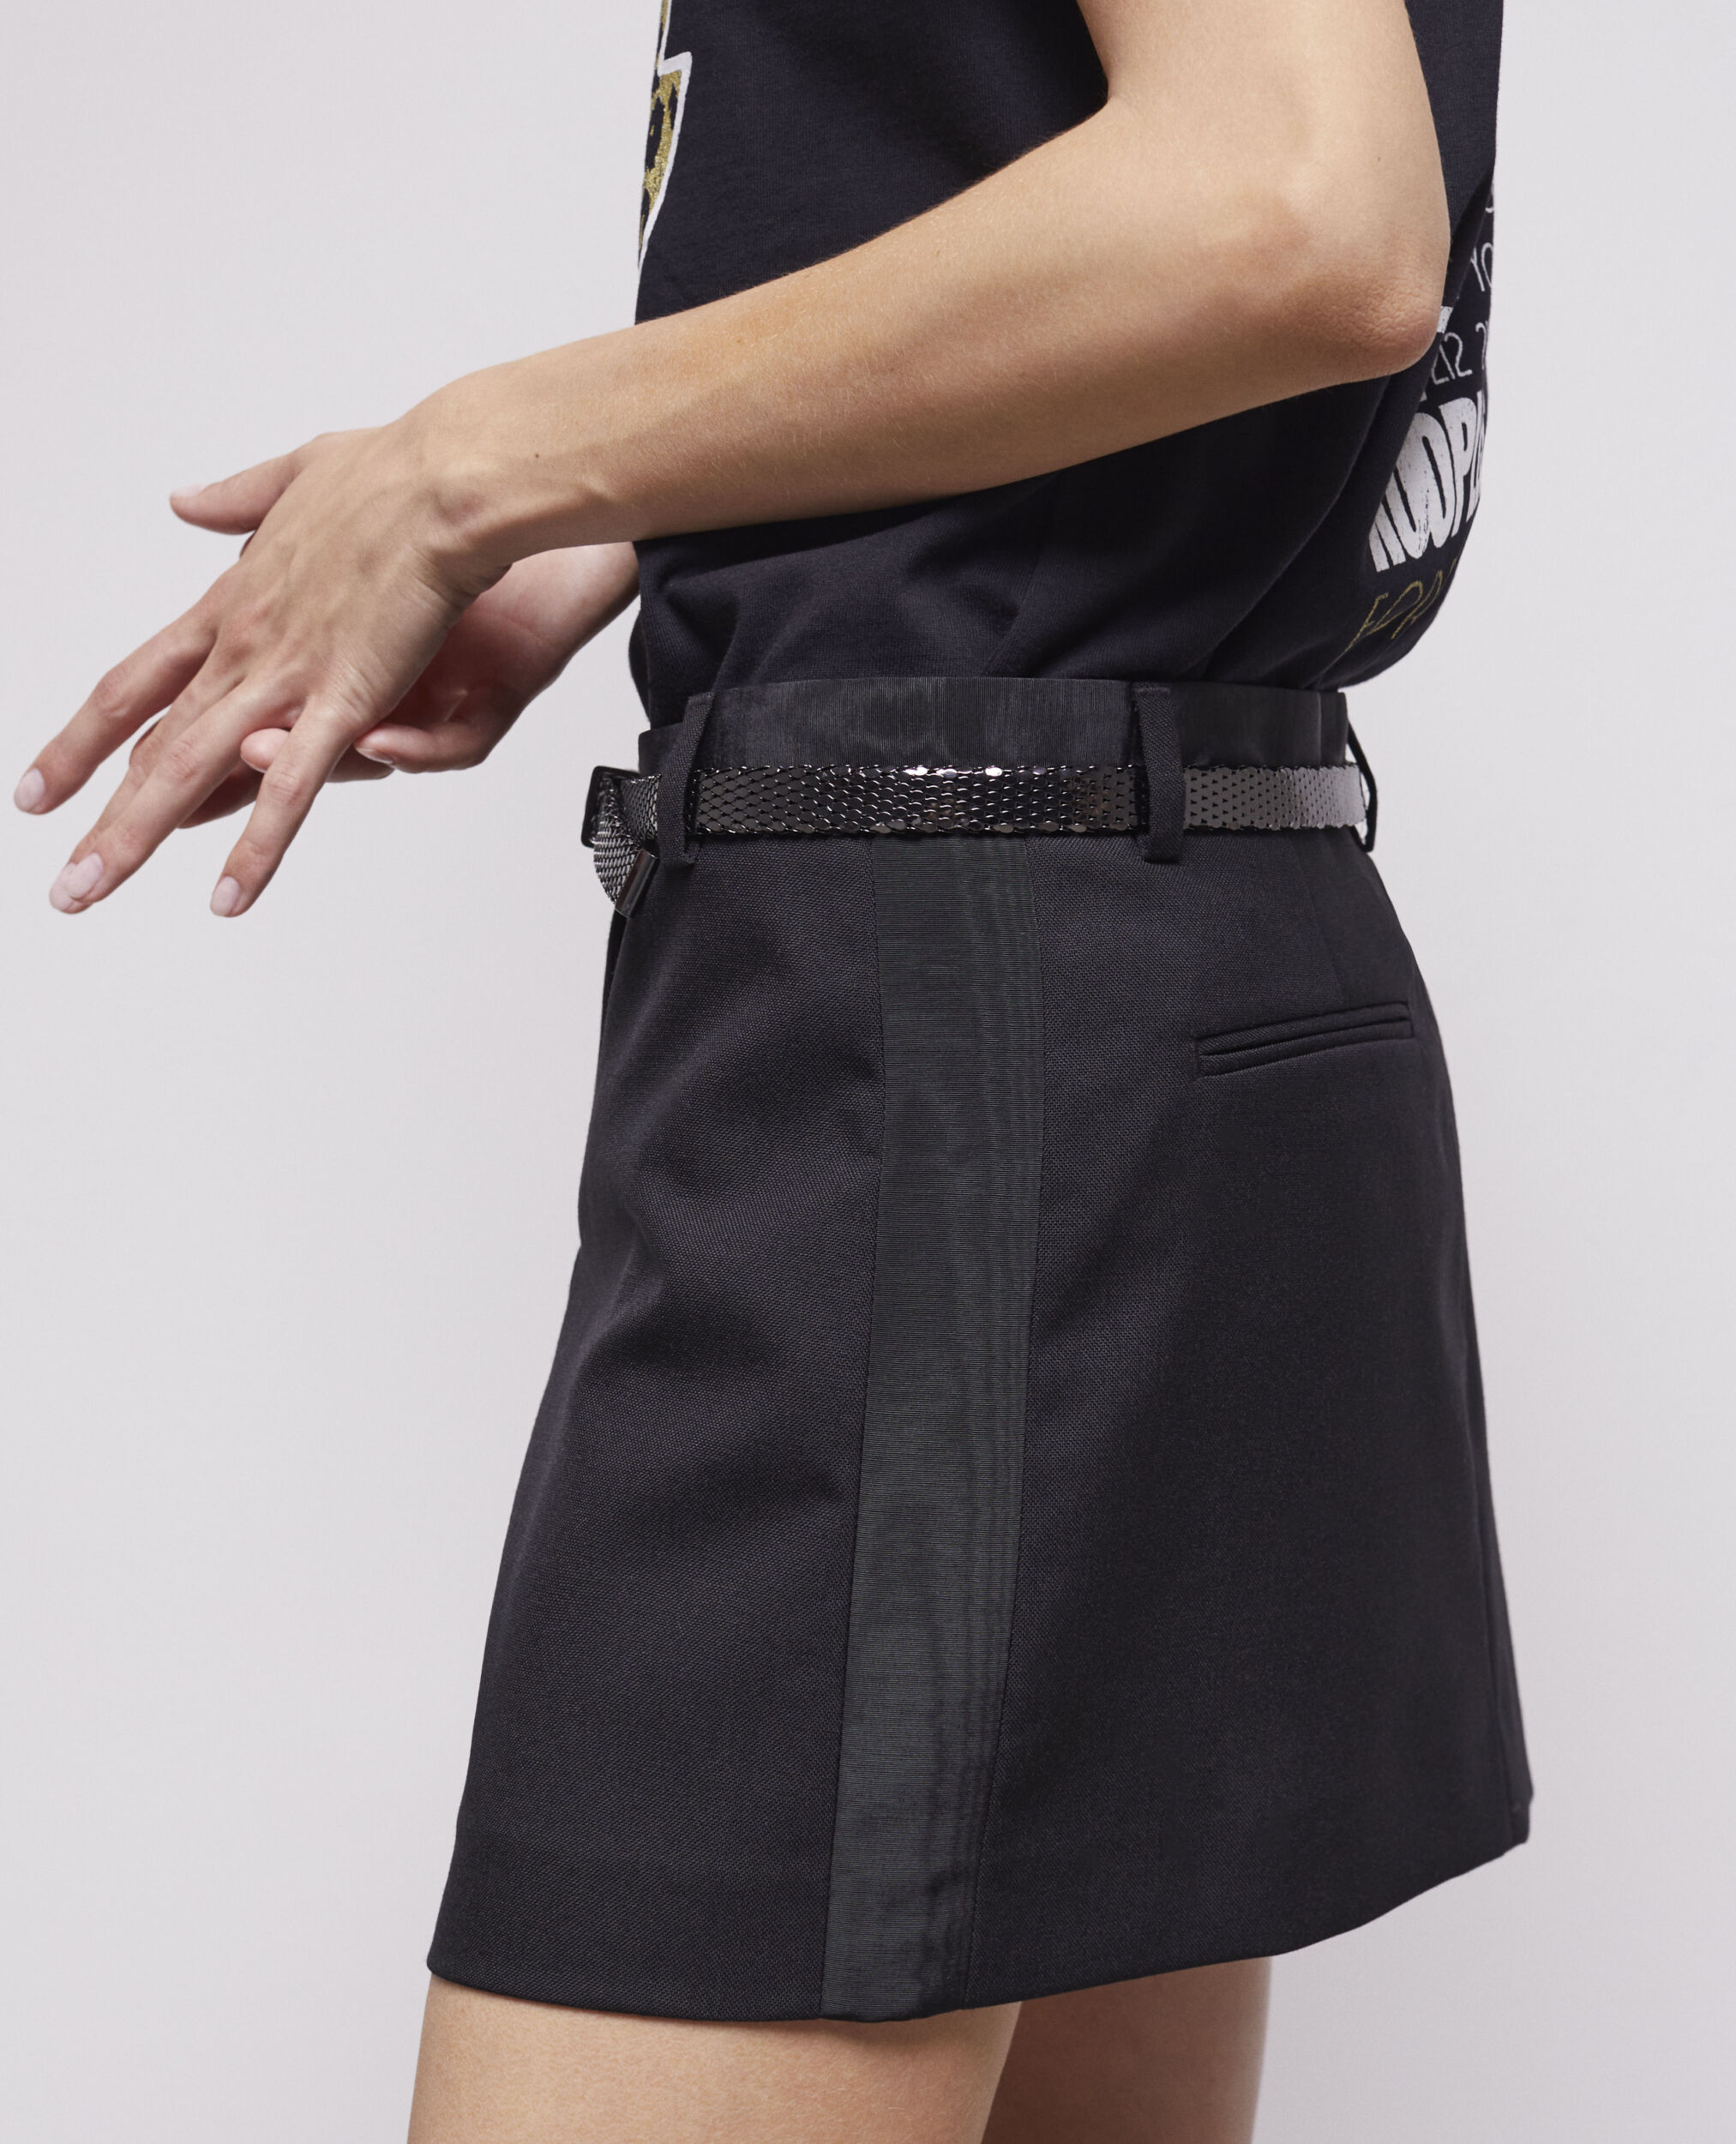 Buy SICHAYA Women Grey Woolen Mini Skirt Waist 28 Inches at Amazonin